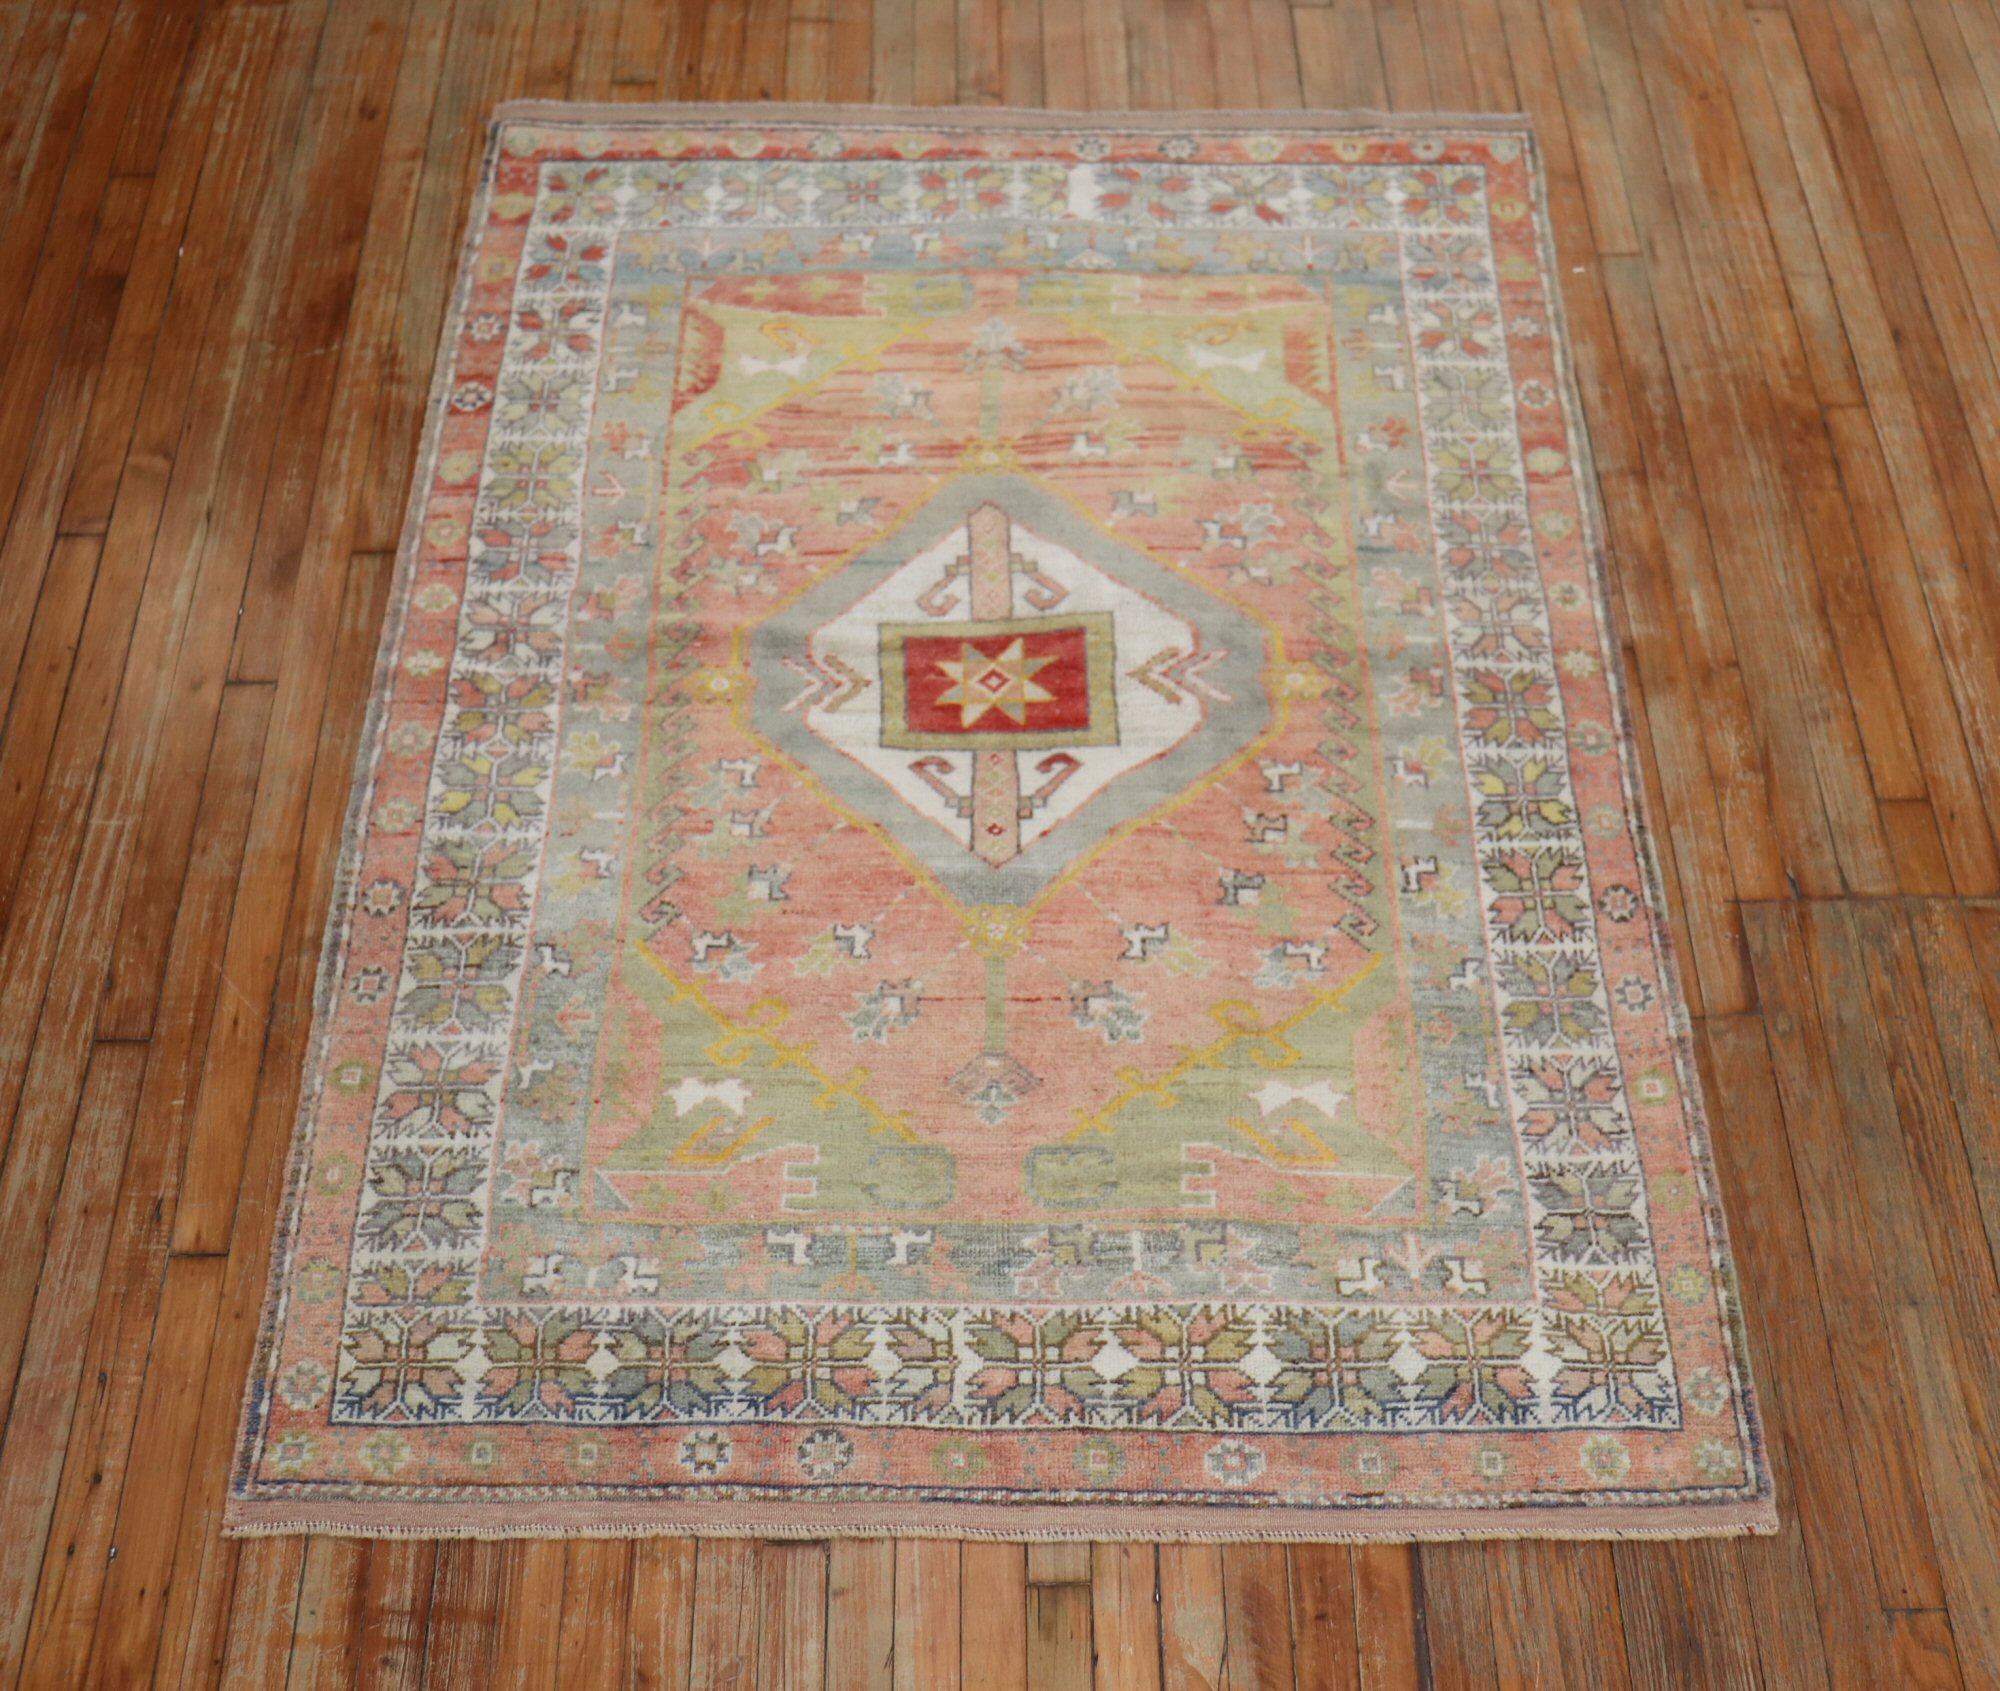 Lovely mid-20th century Turkish Dazkiri Central Anatolian rug.

Size: 4'7